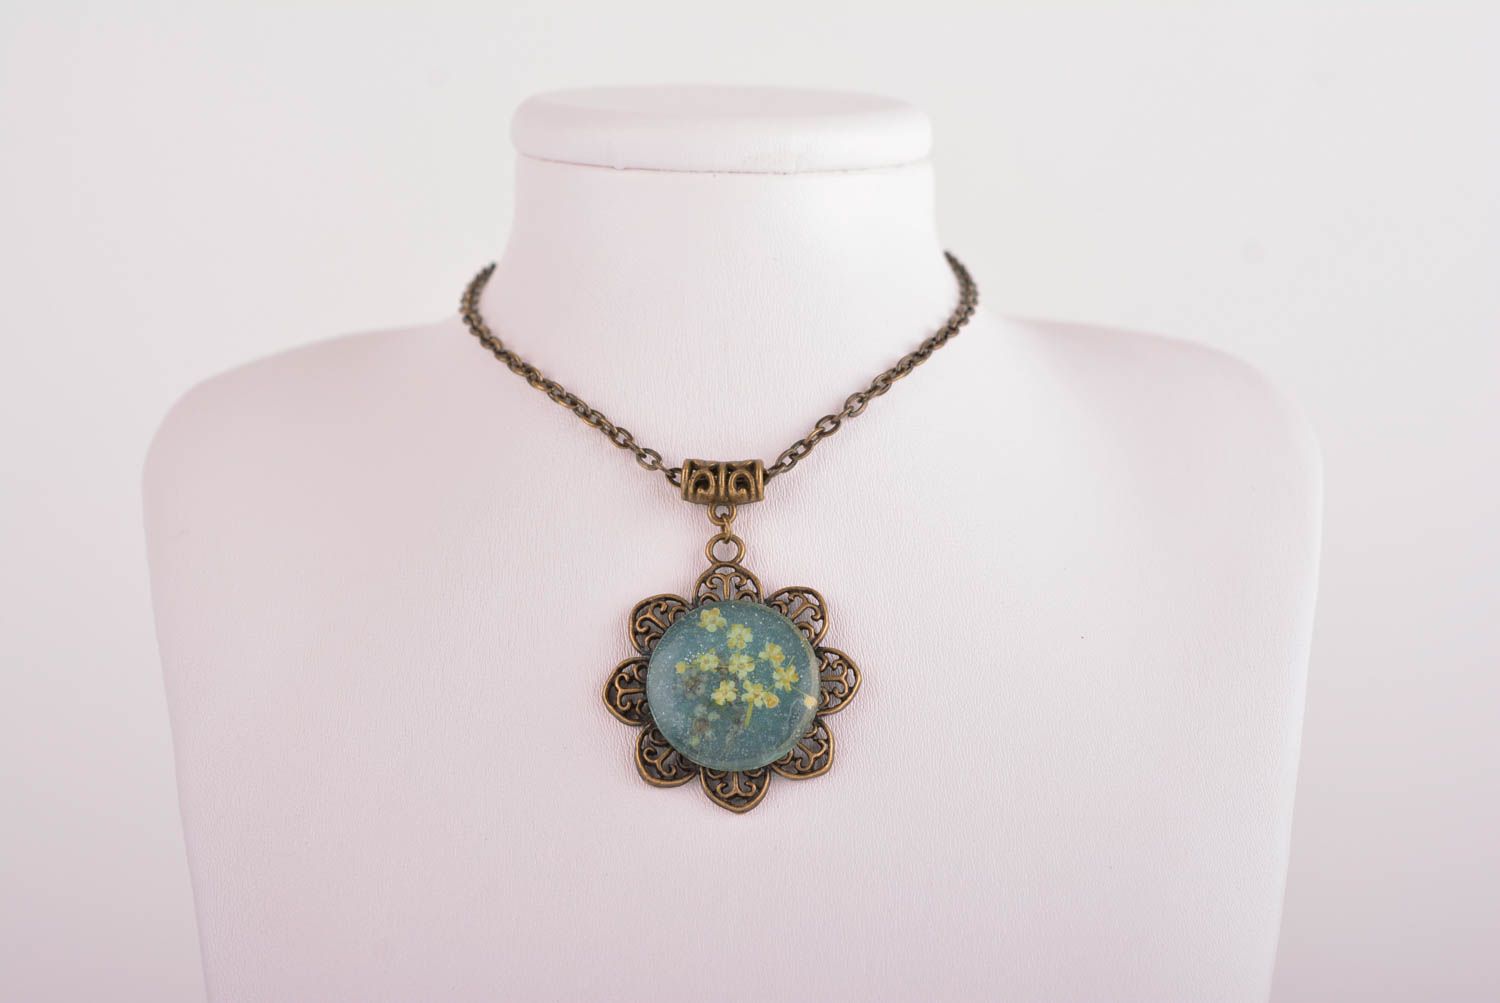 Stylish handmade epoxy pendant botanical jewelry designs accessories for girls photo 2